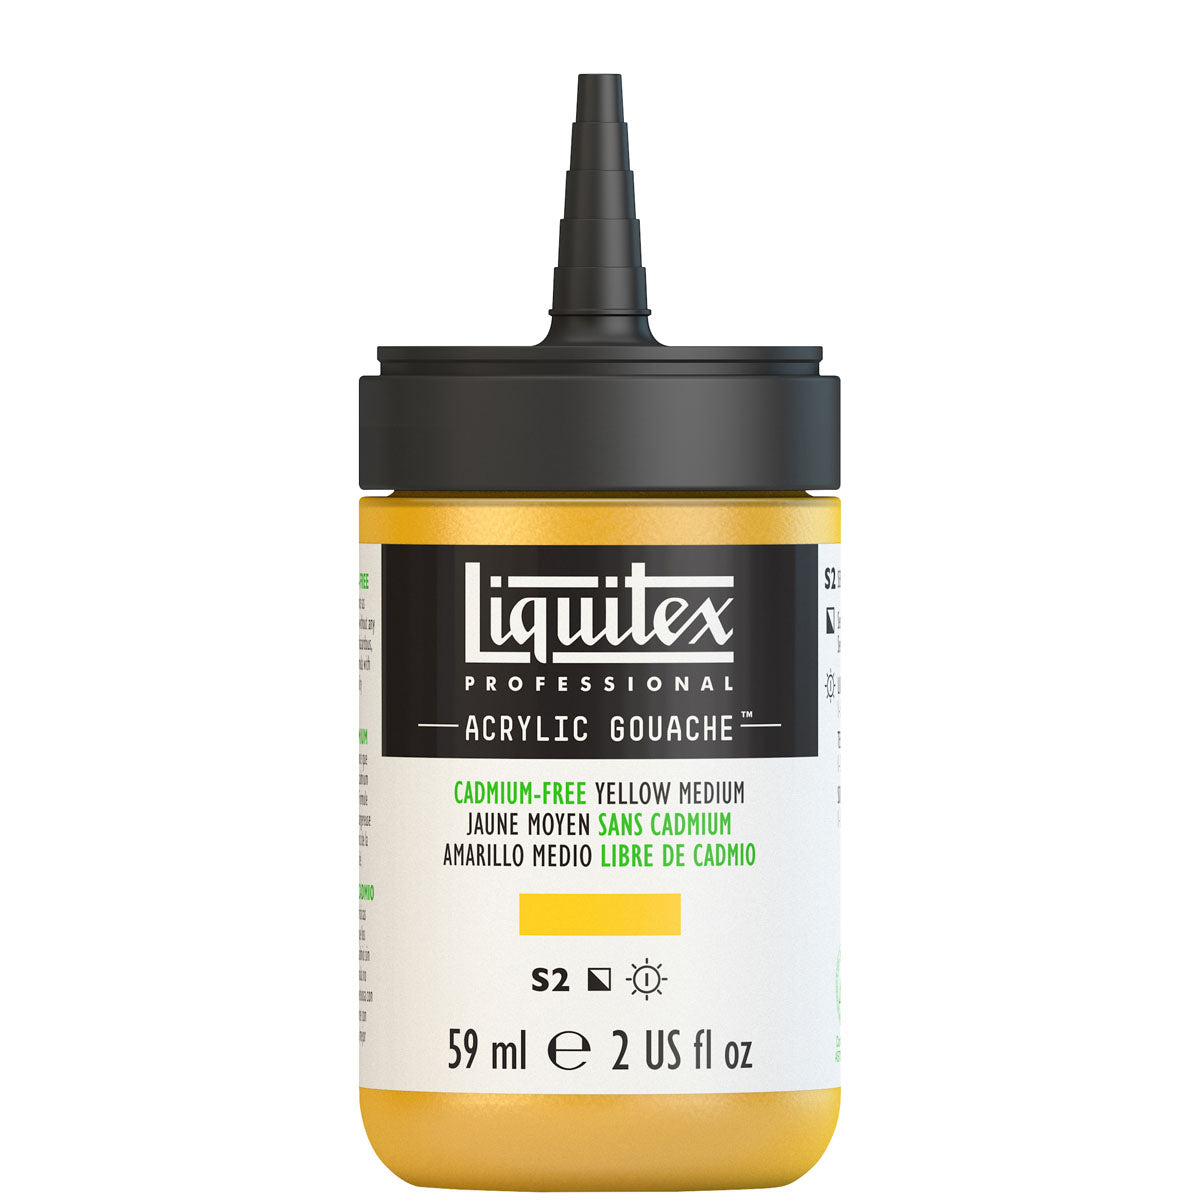 Liquitex - Acrylic Gouache 59ml S2 - Cadimum-Free Yellow Medium